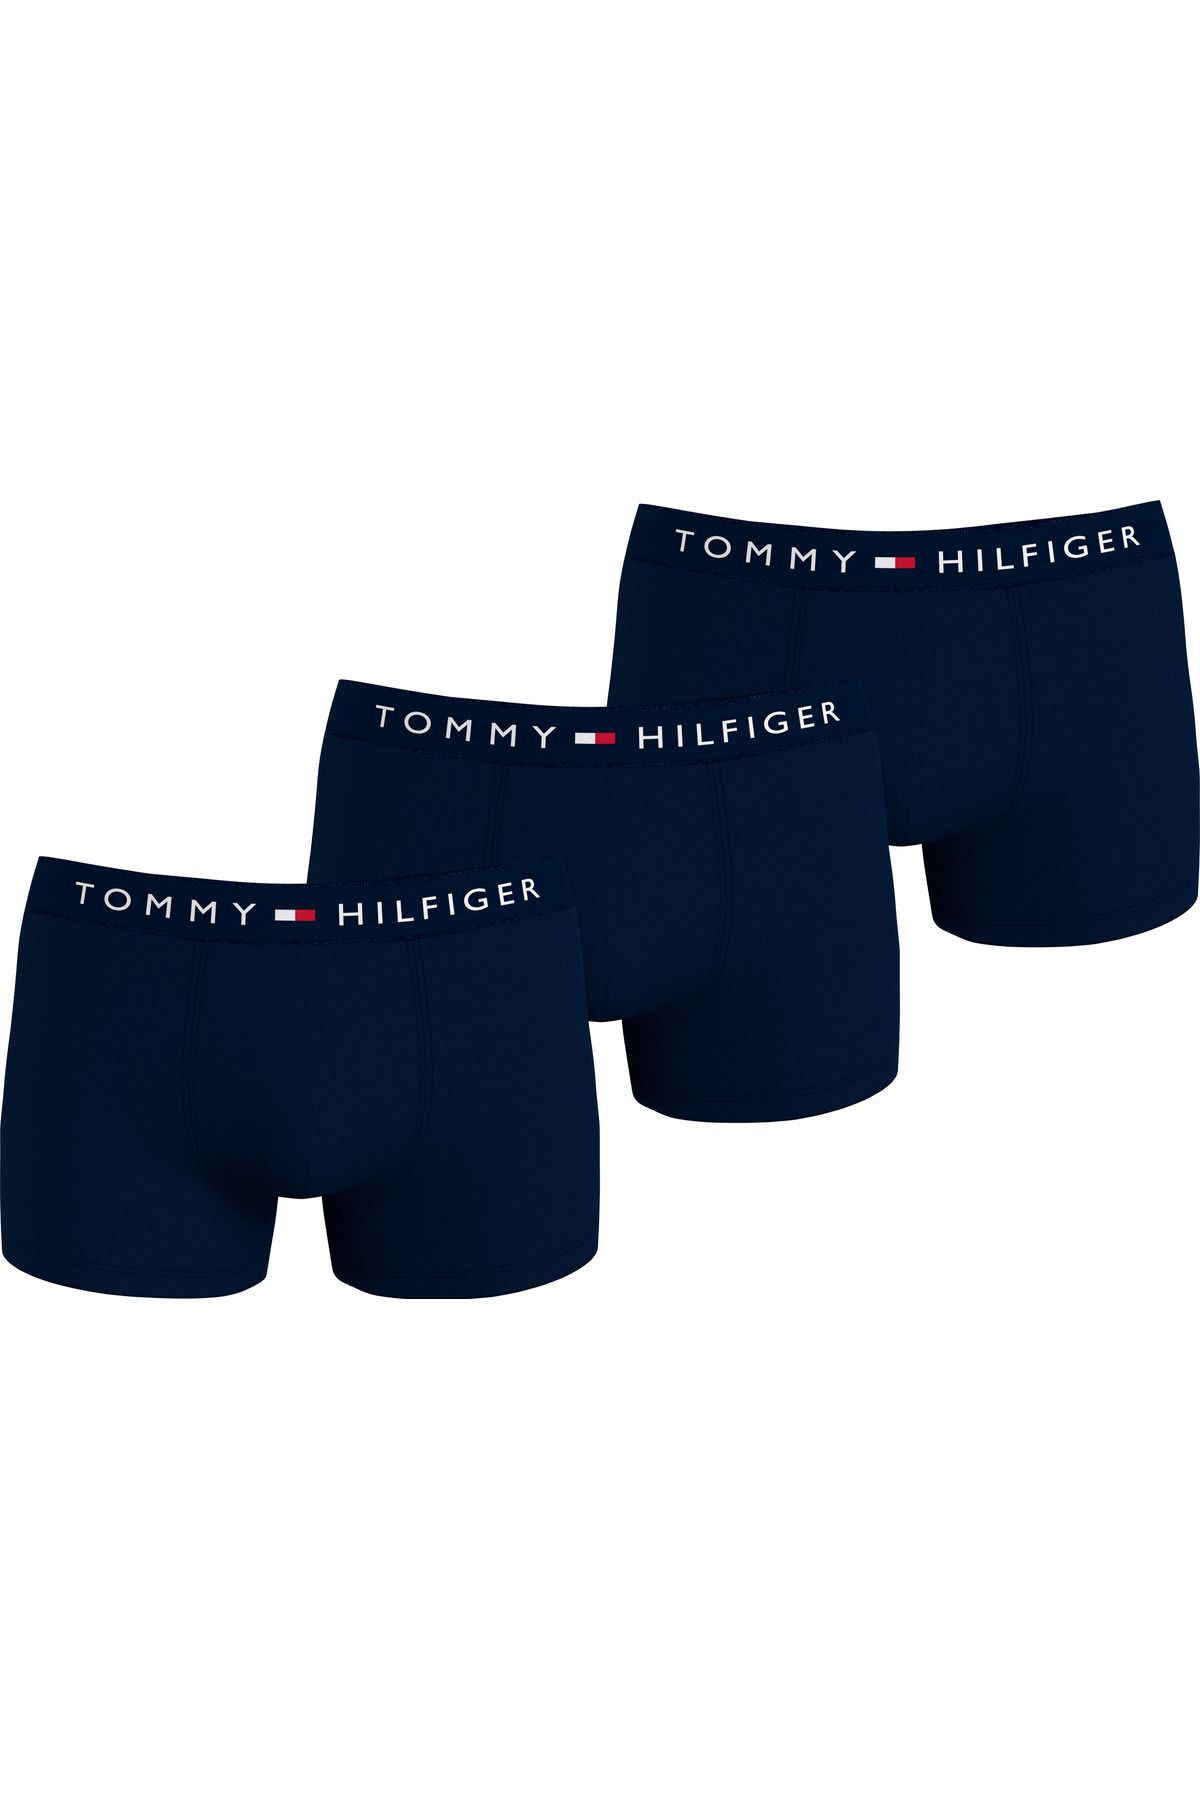 Tommy Hilfiger Erkek Marka Logolu Elastik Bantlı Günlük Kullanıma Uygun Lacivert Boxer Um0um03180-0sy